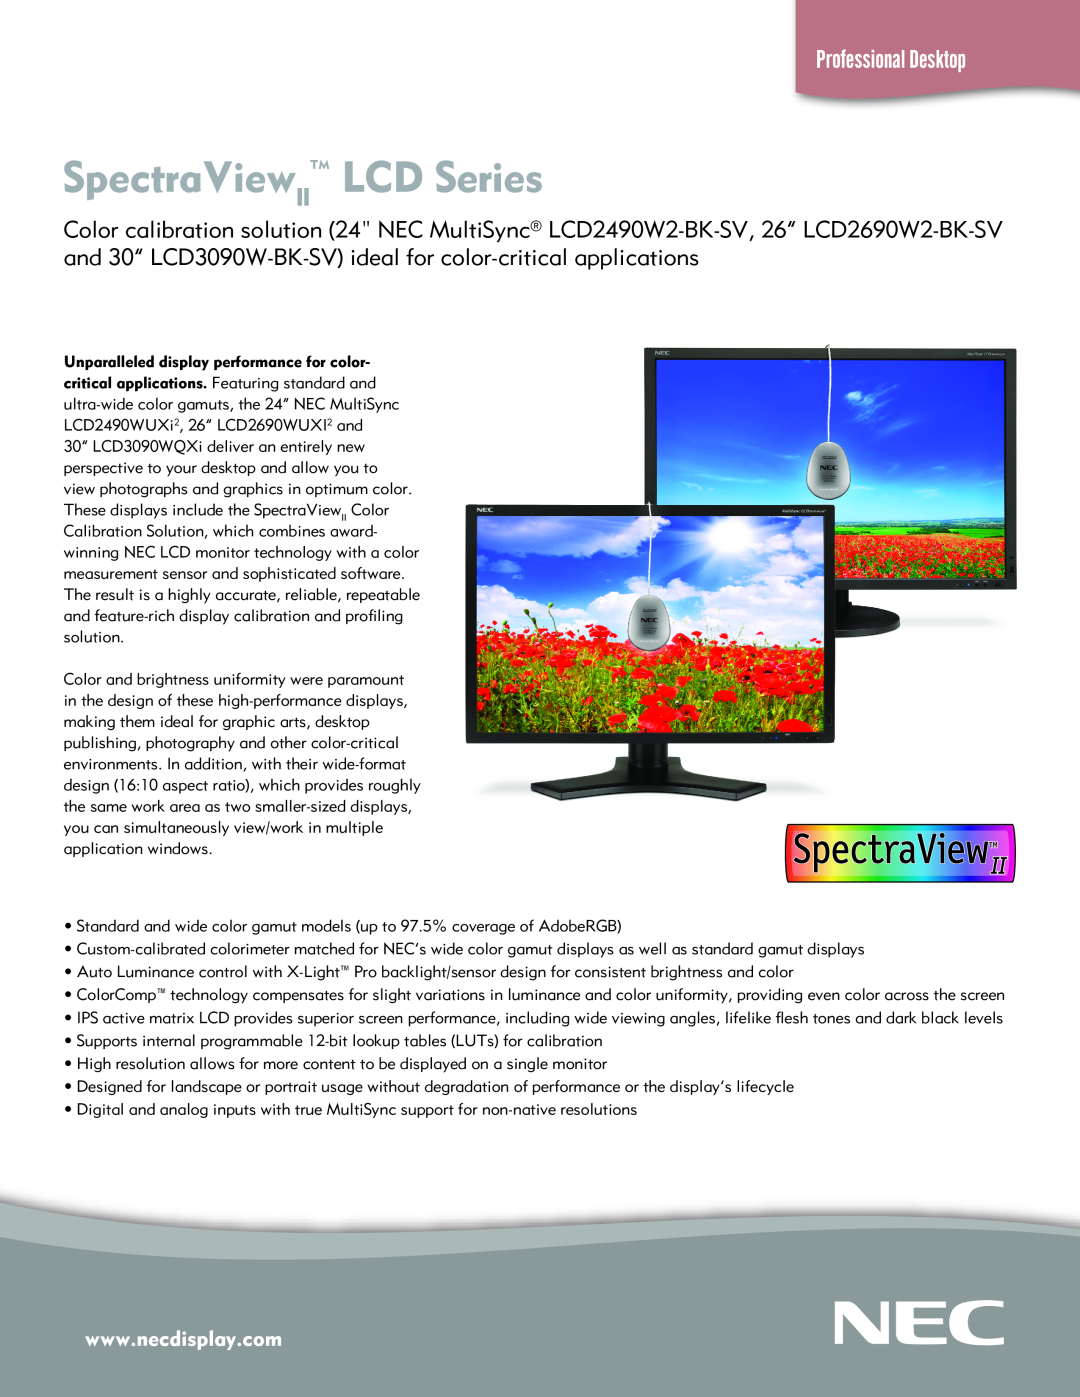 NEC LCD2490W2-BK-SV, LCD2690W2-BK-SV manual SpectraViewIITM LCD Series, Professional Desktop 